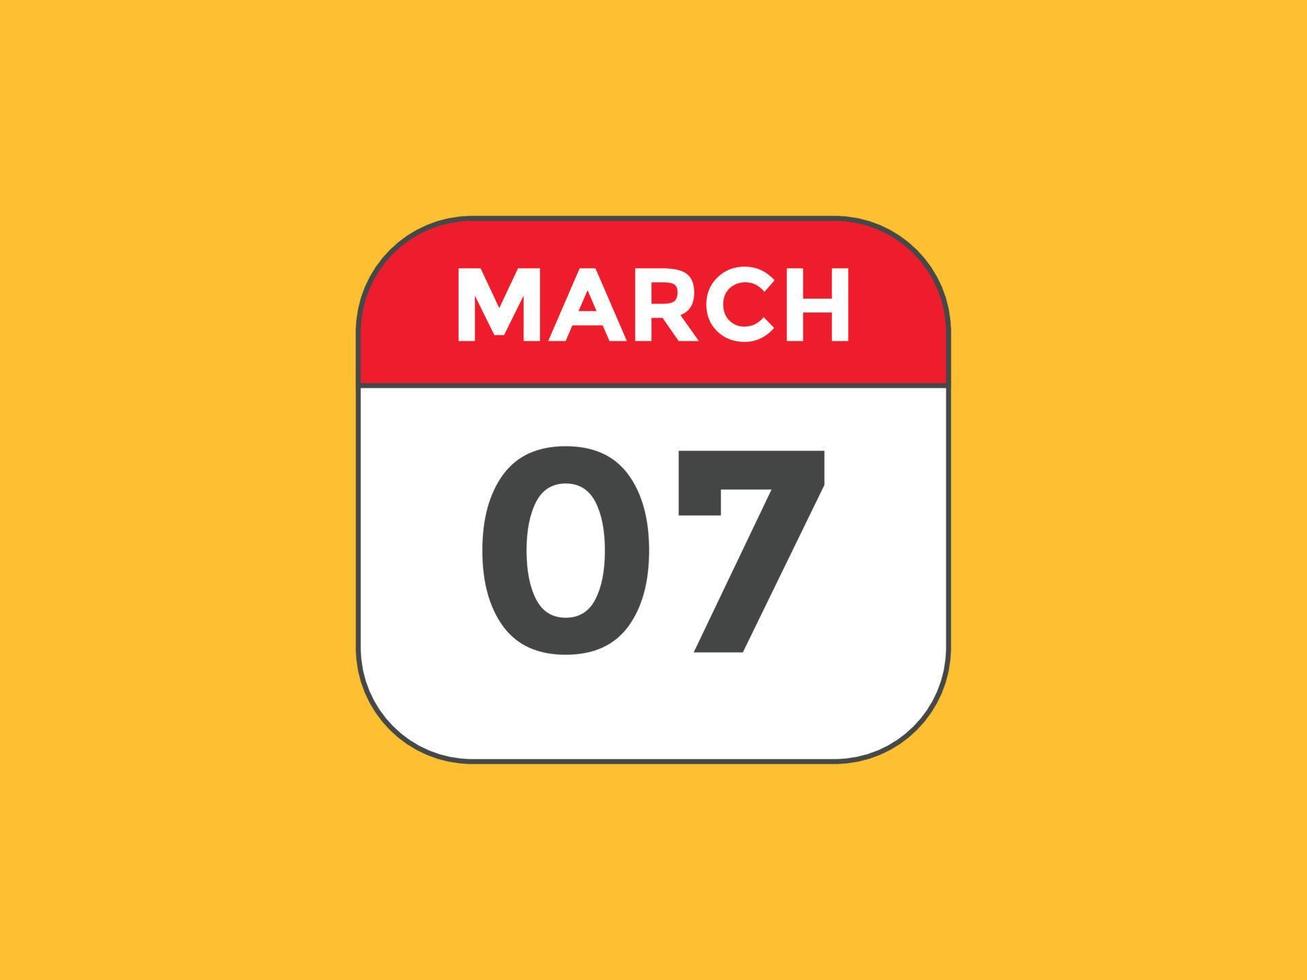 7. märz kalendererinnerung. 7. märz tägliche kalendersymbolvorlage. Kalender 7. März Icon-Design-Vorlage. Vektor-Illustration vektor